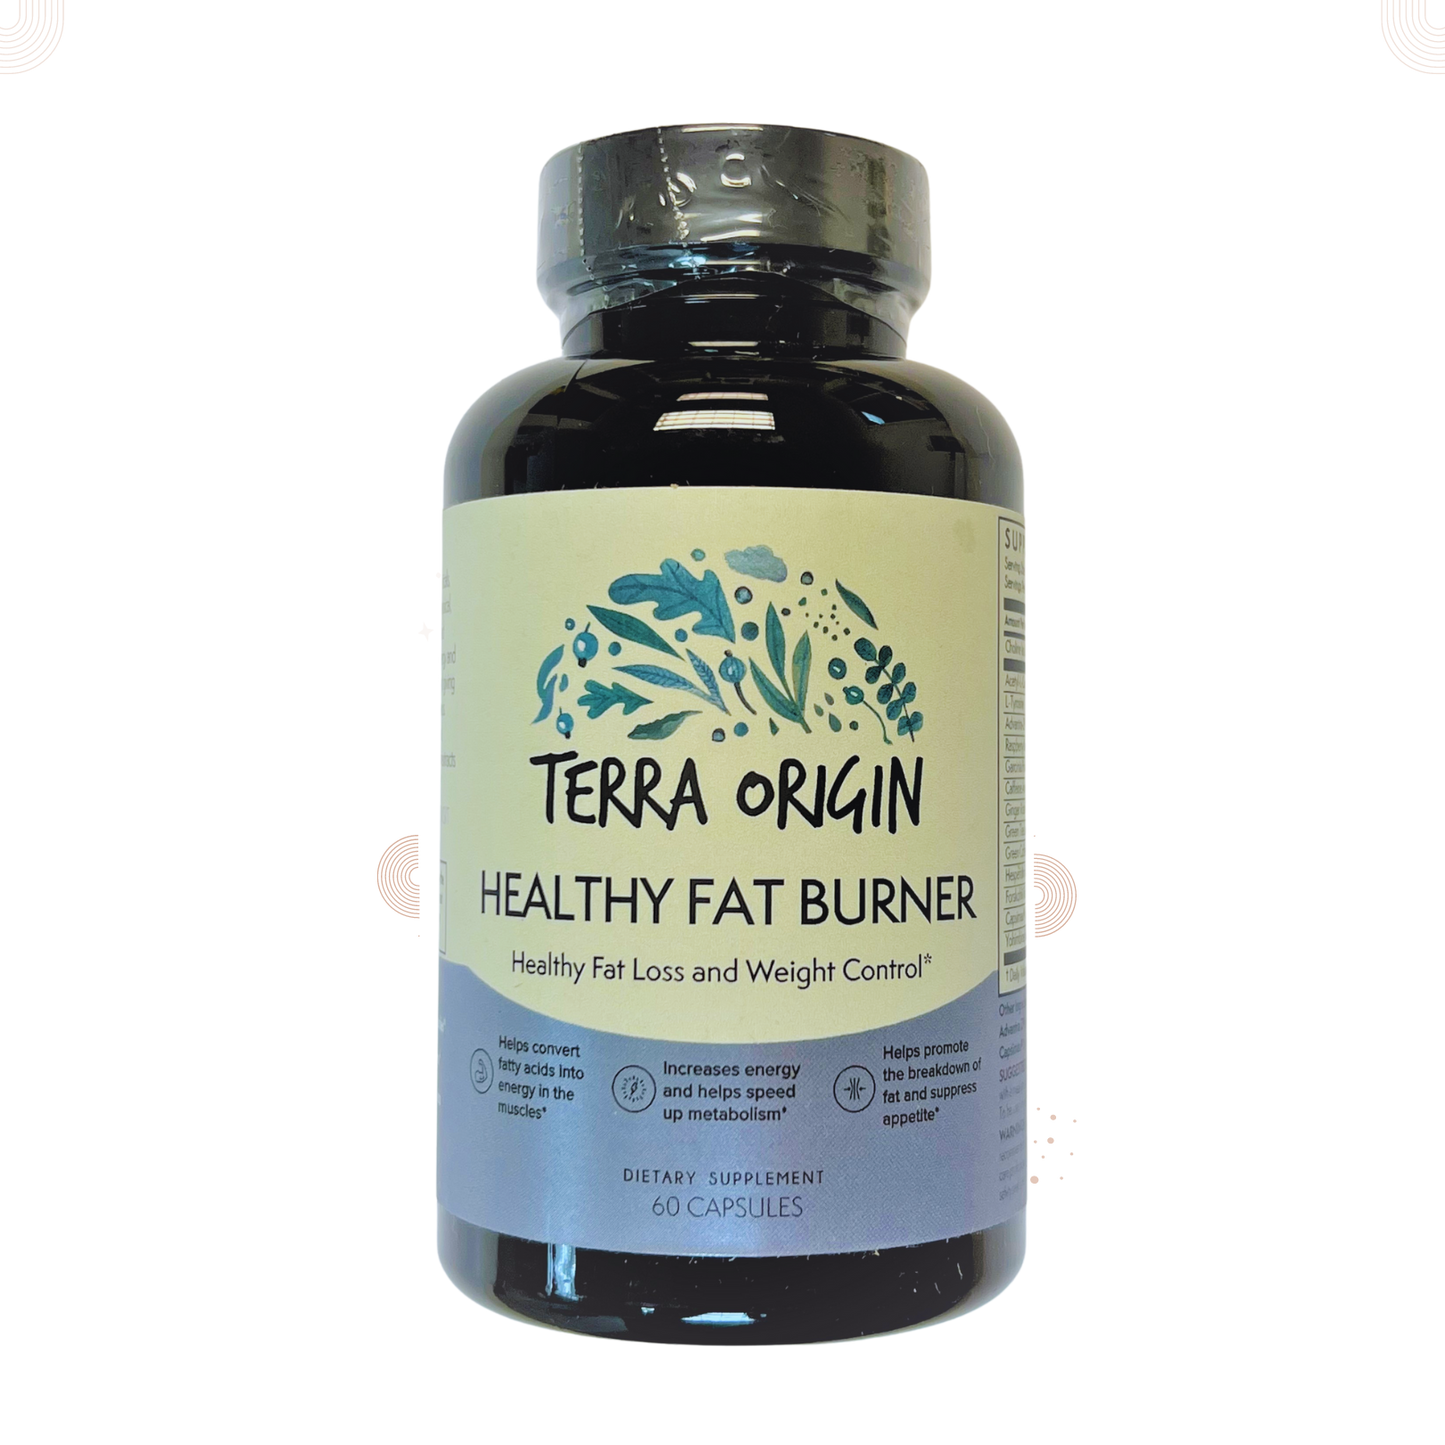 All Natural Herbal Healthy Fat Burner